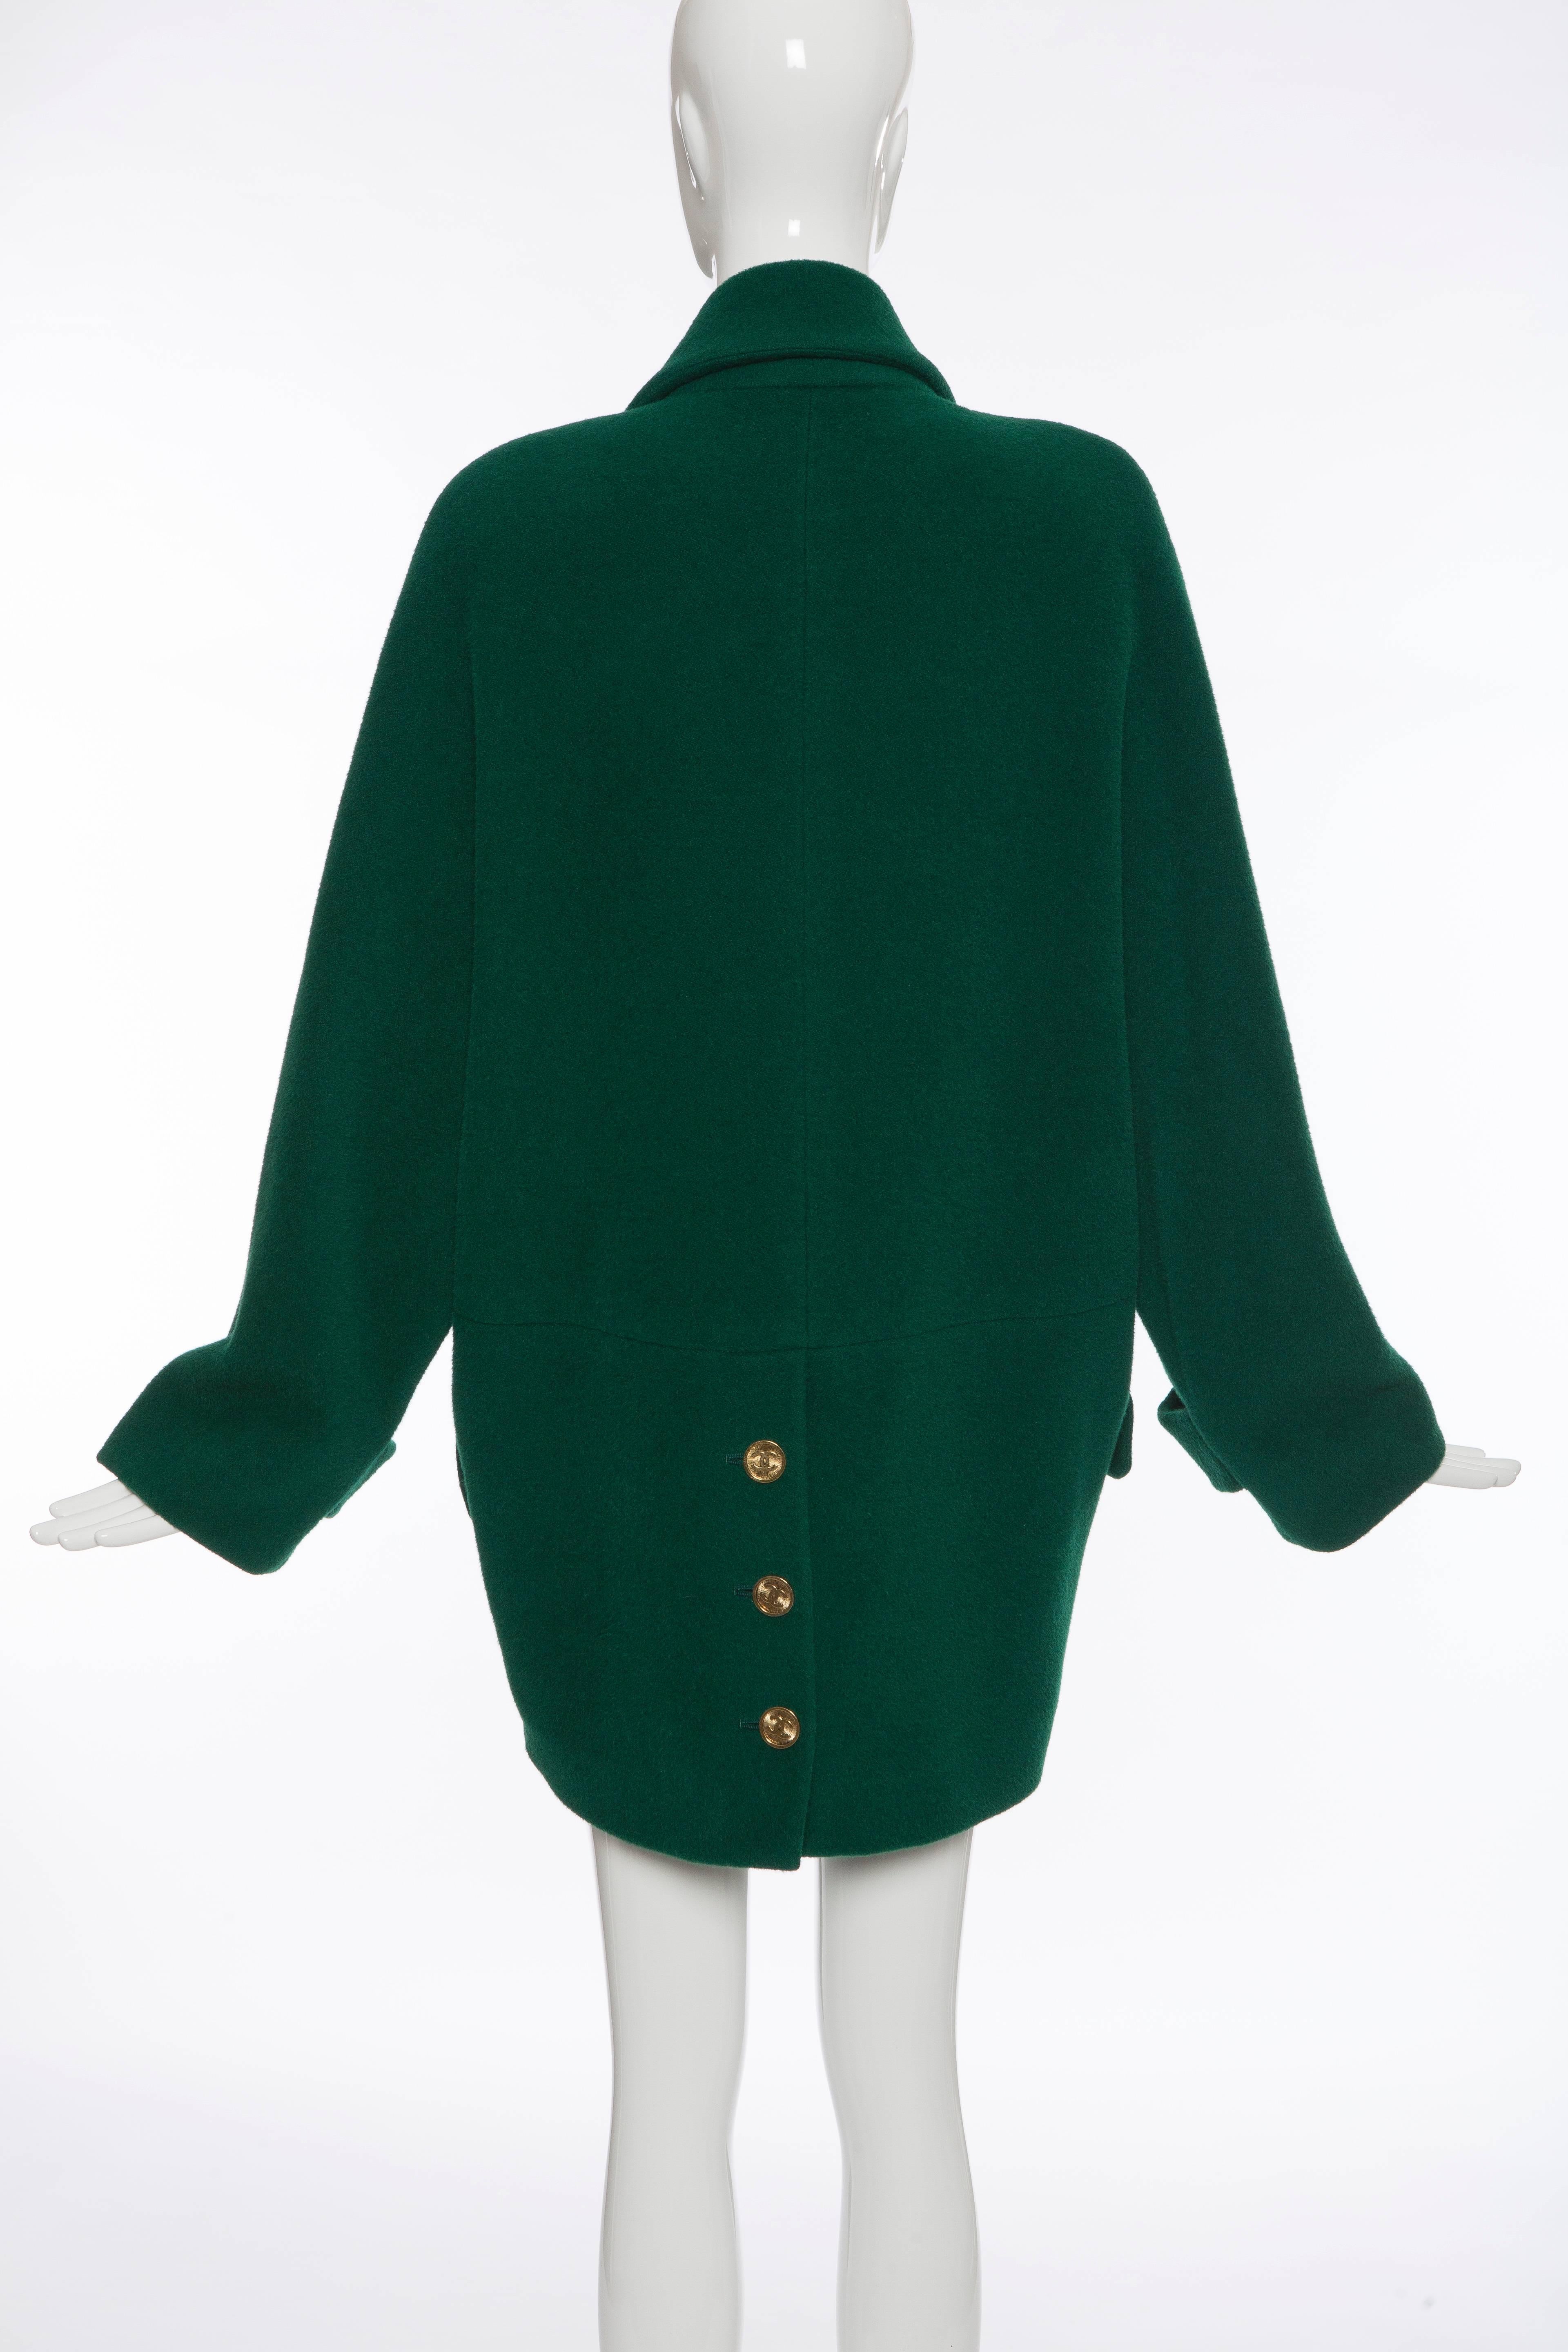 chanel green coat